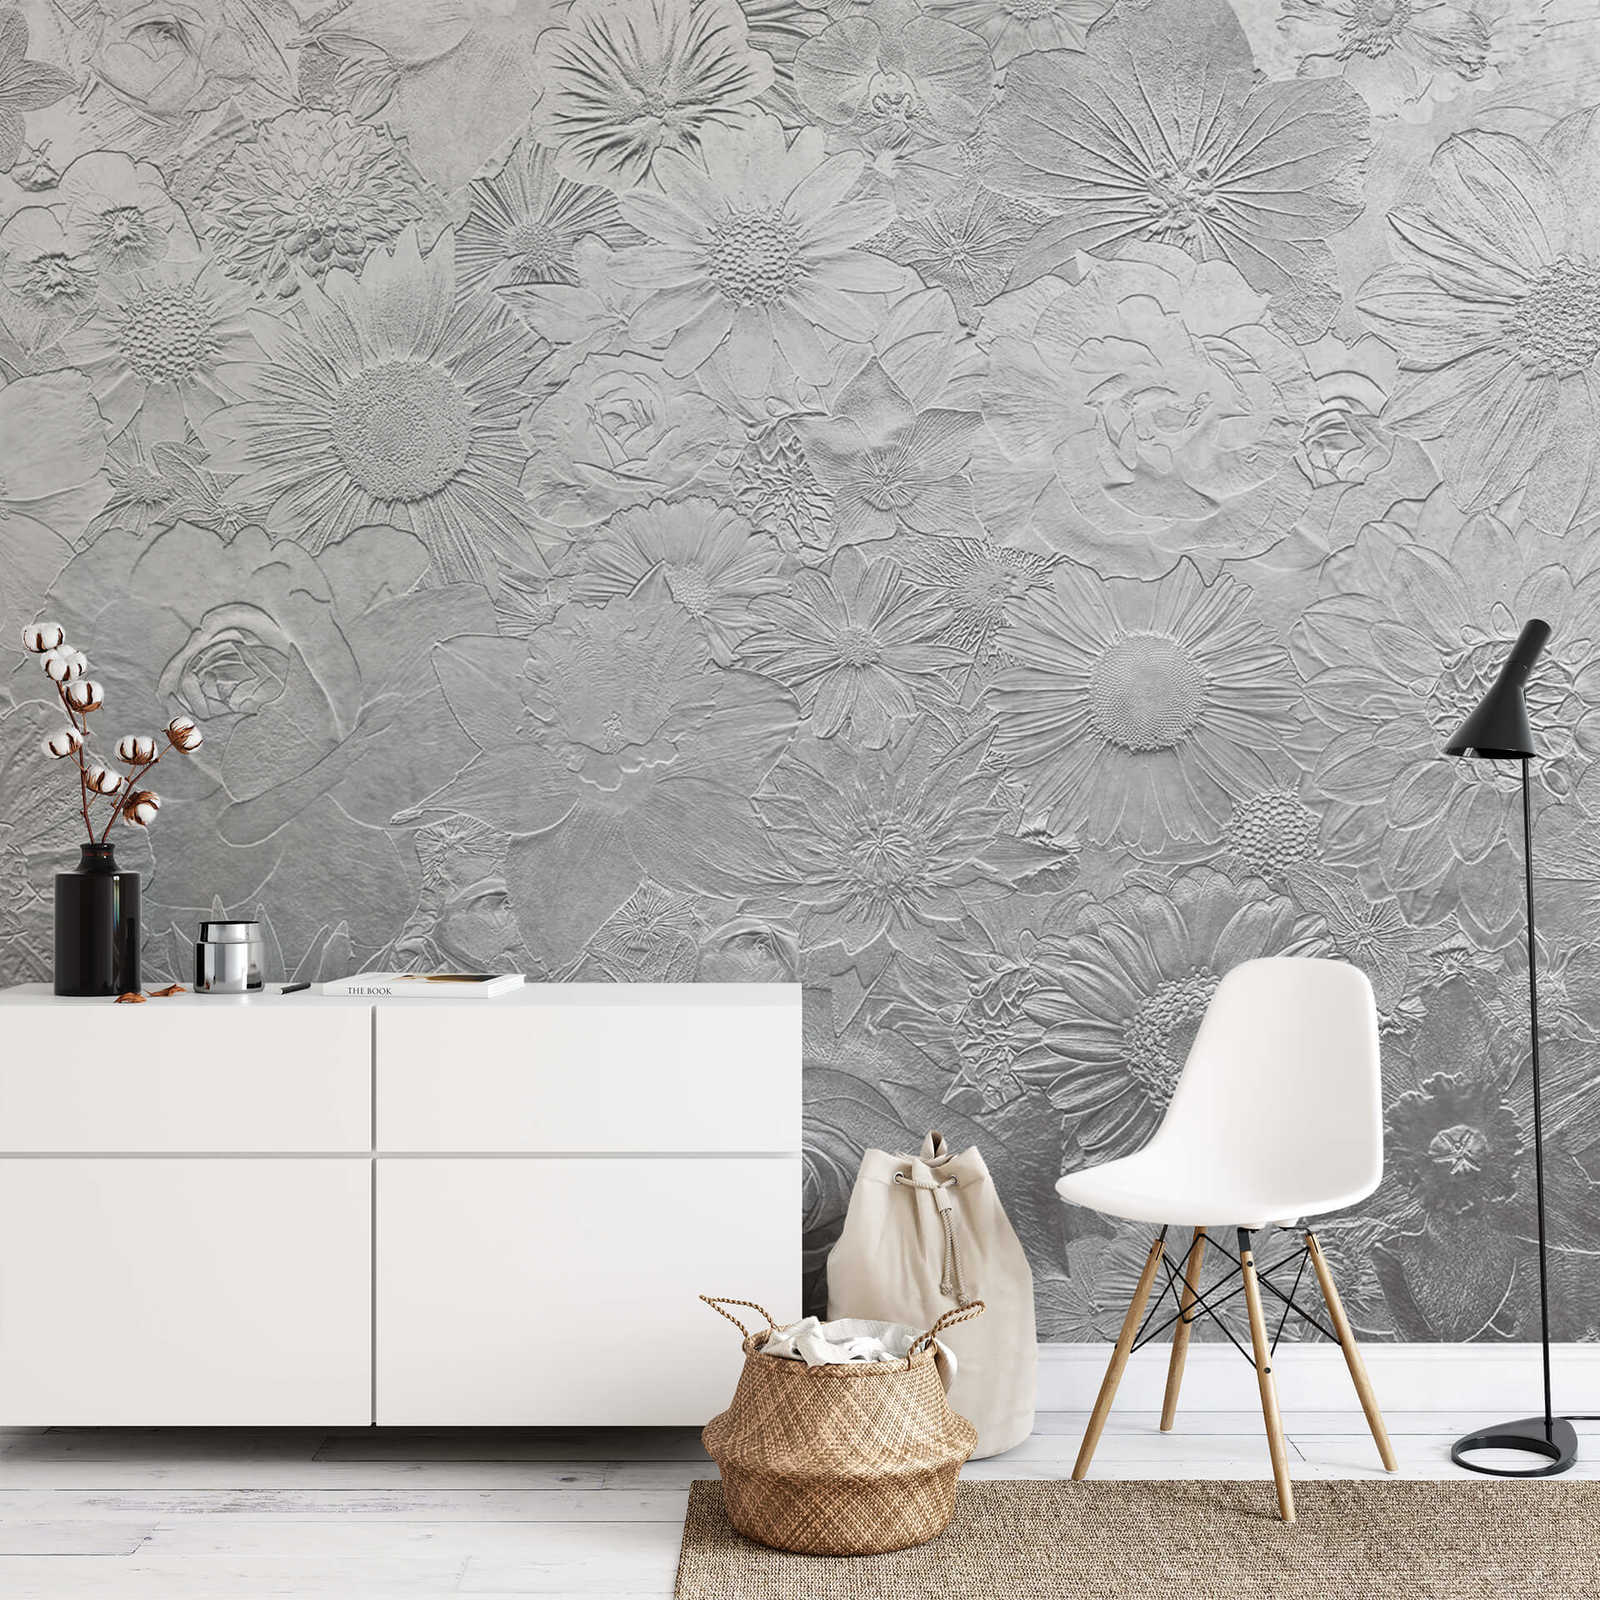             Photo wallpaper silver flowers - grey
        